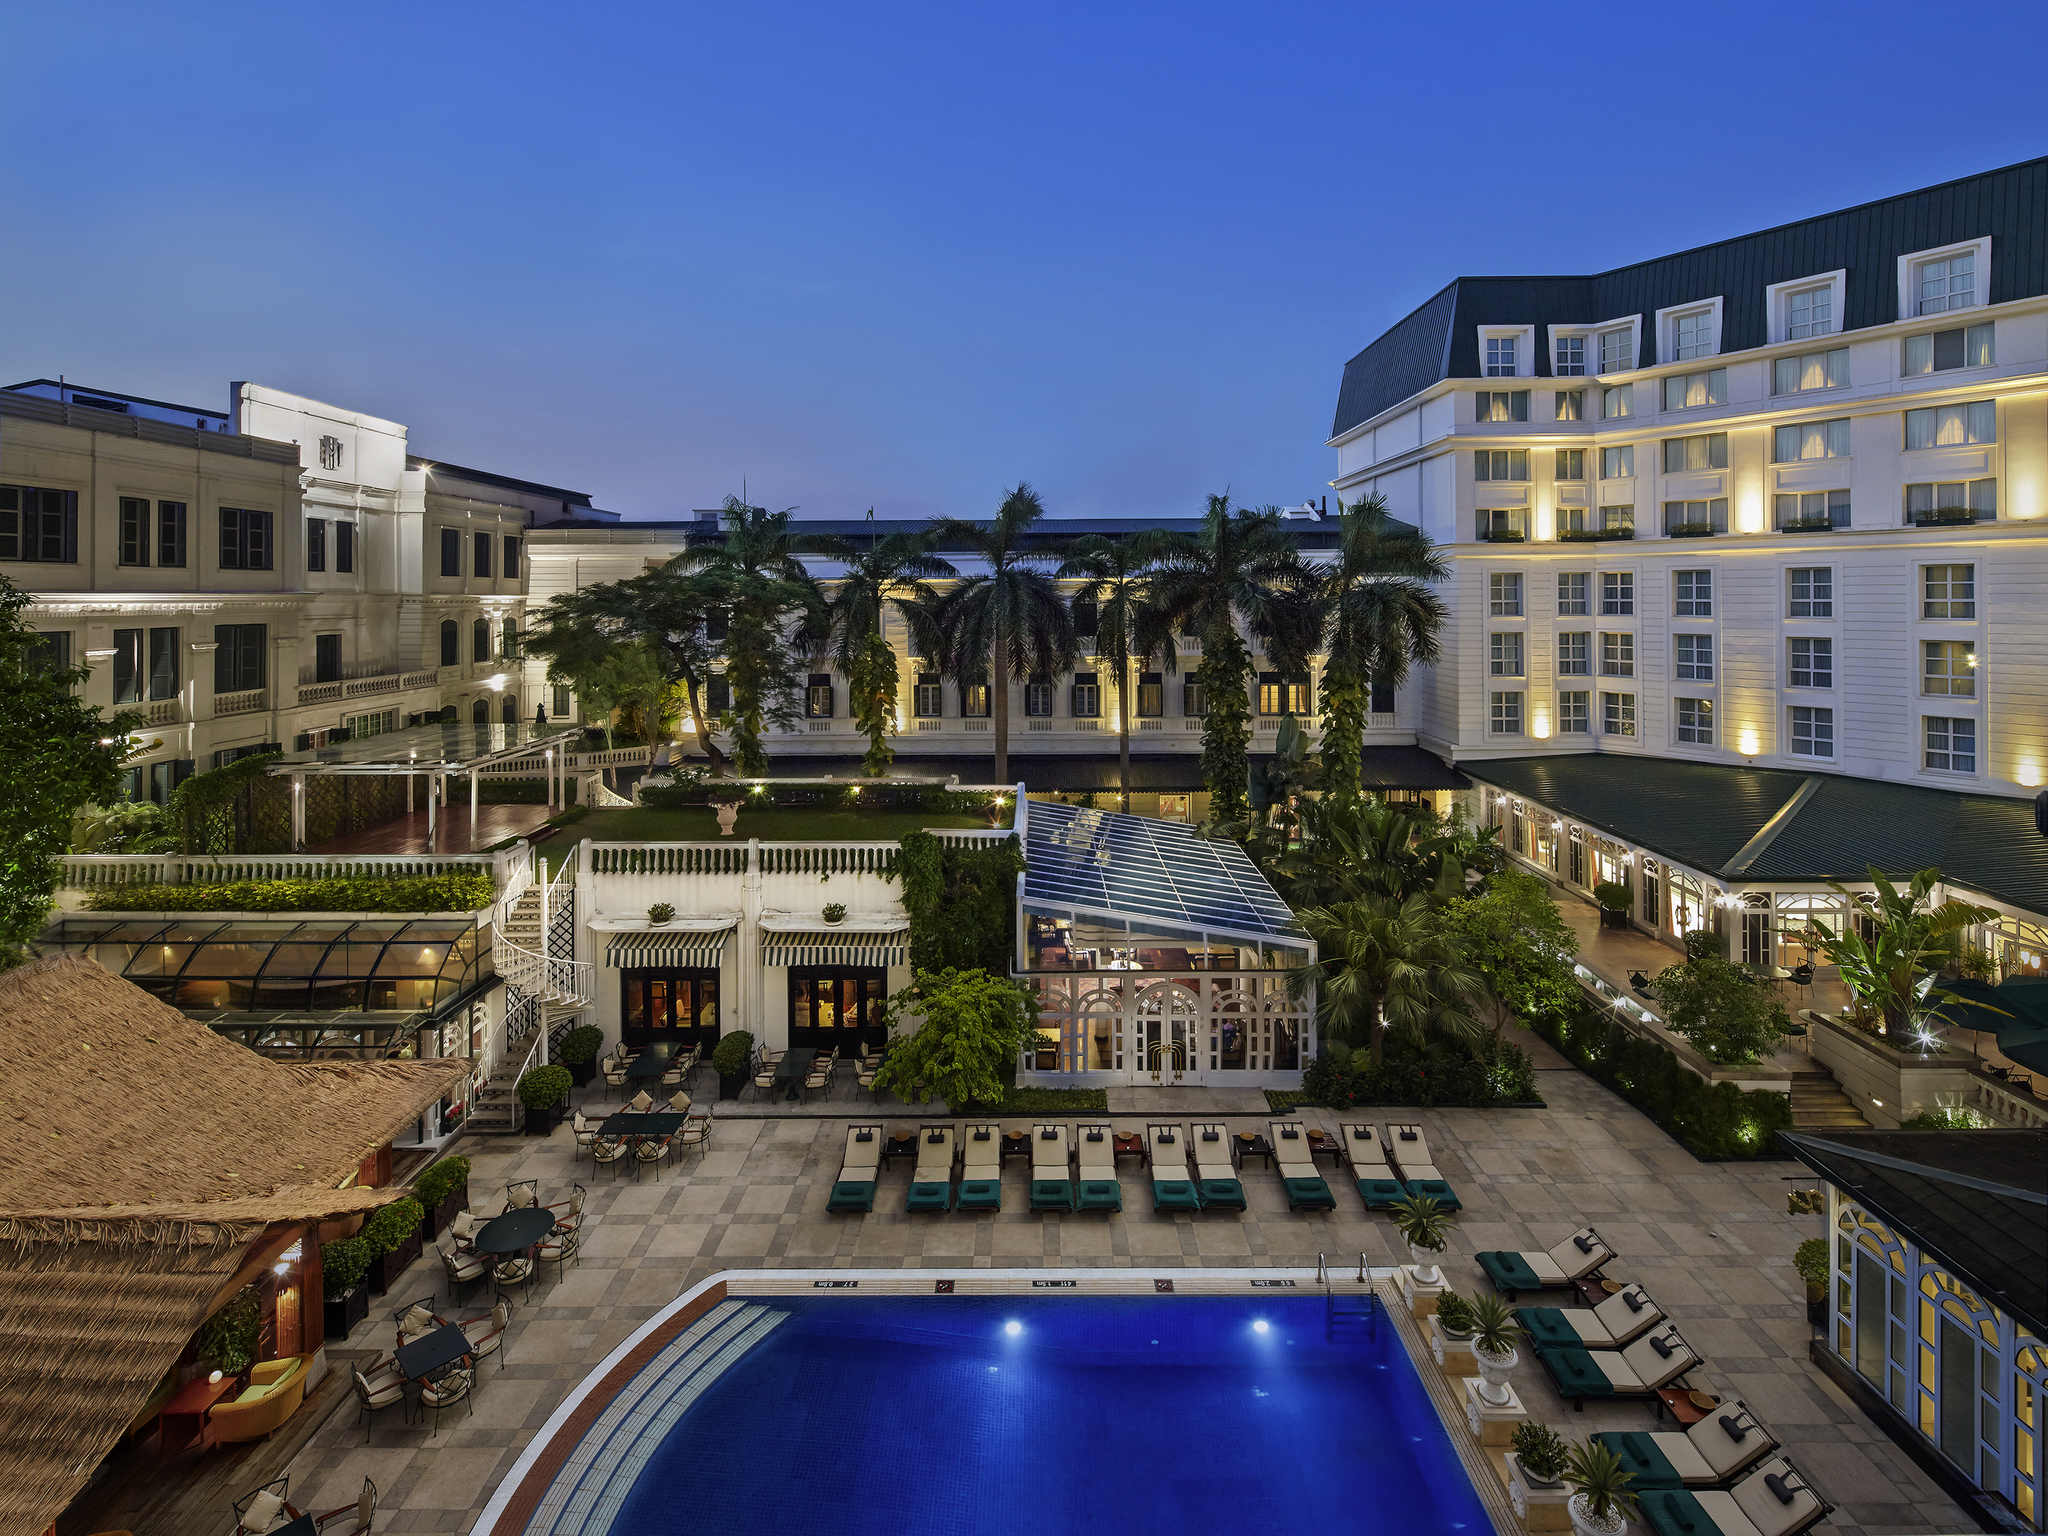 Sofitel Legend Metropole Hotel Hanoi Vietnam